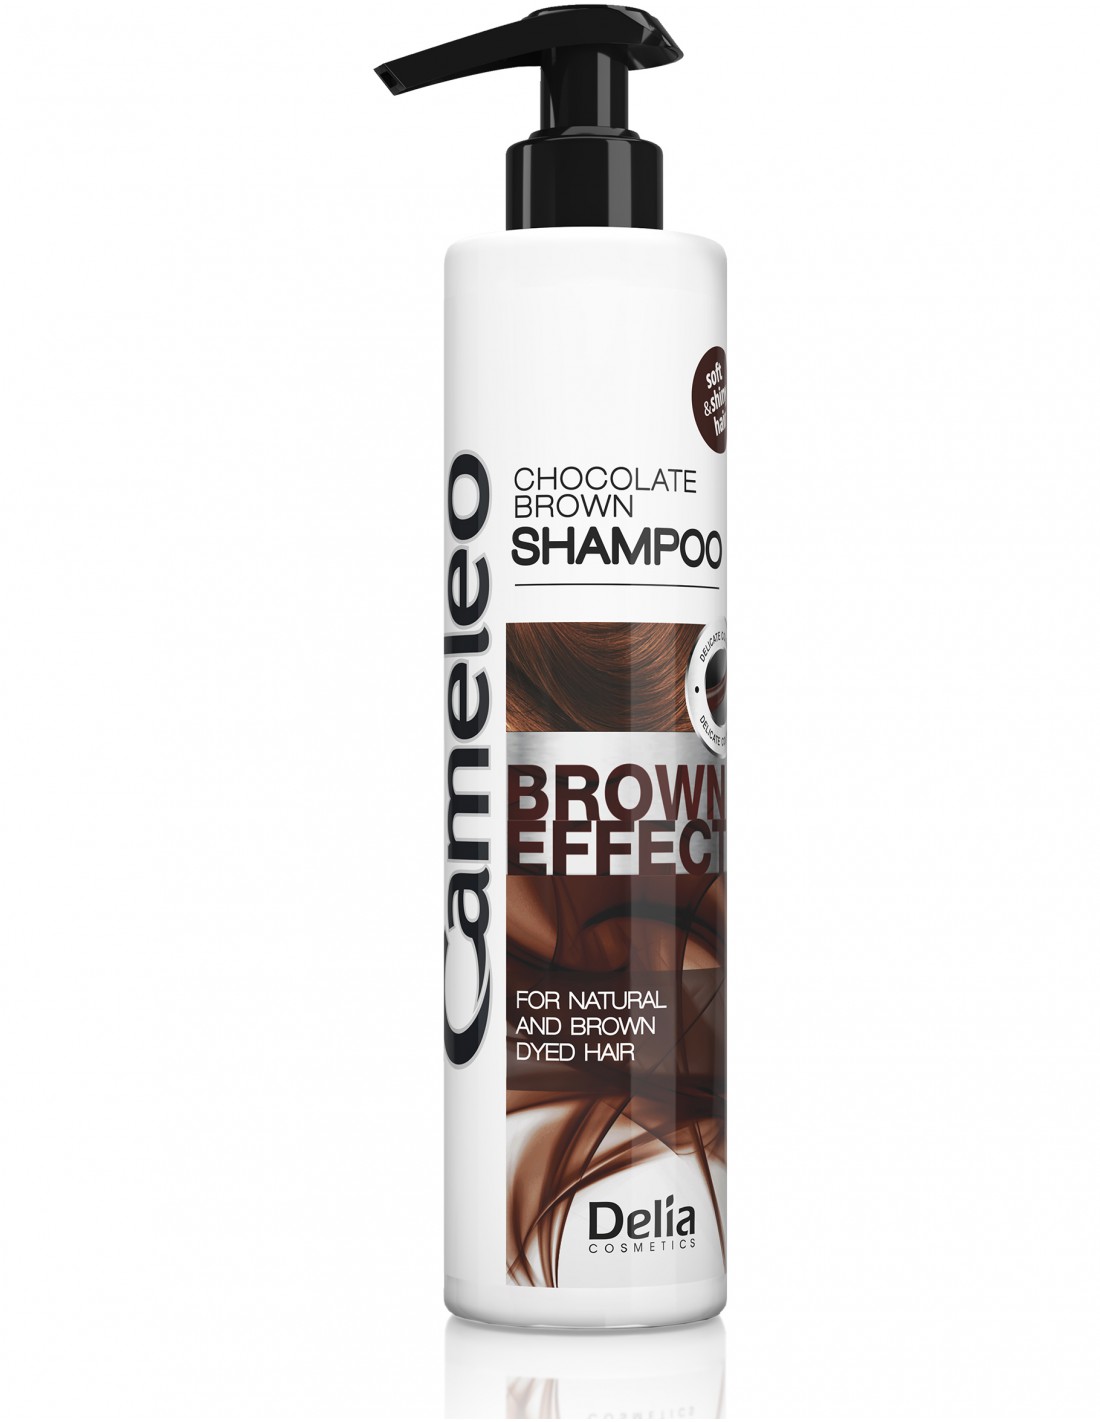 cameleo natural szampon